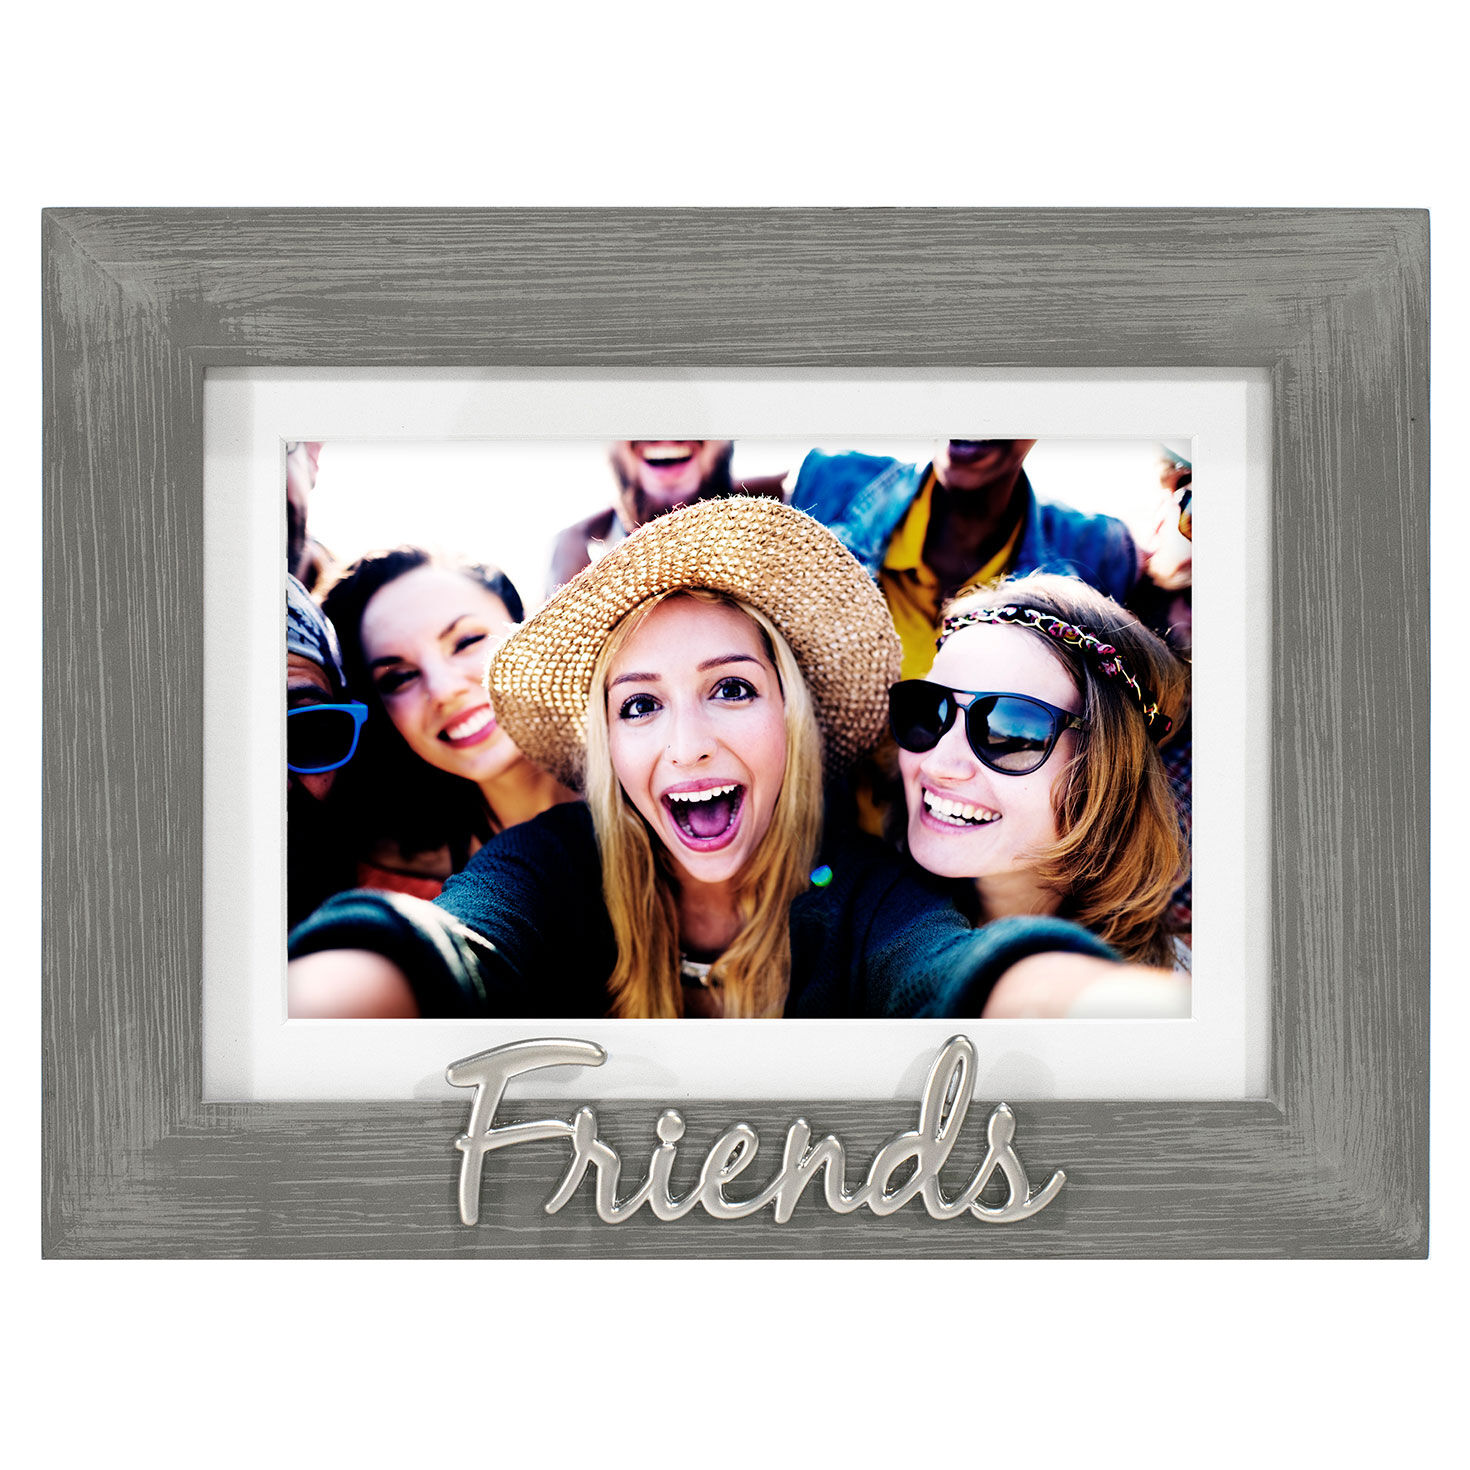 Personalized Best Friends Frame - 4x6